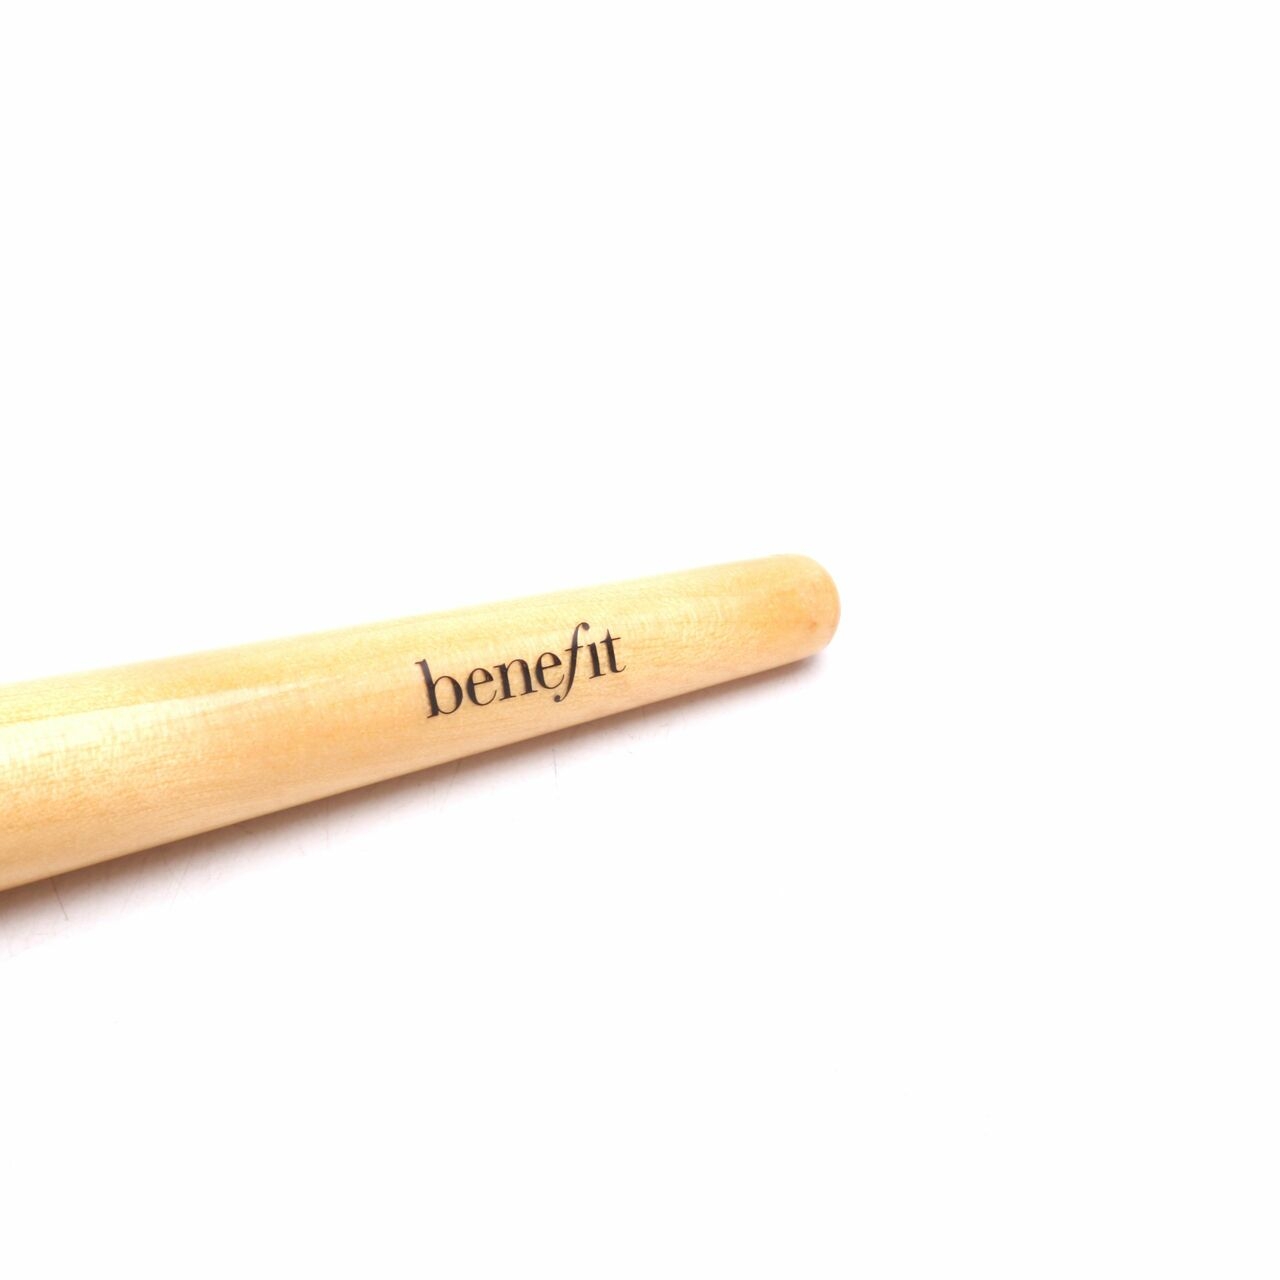 Benefit Foundation Brush Tools